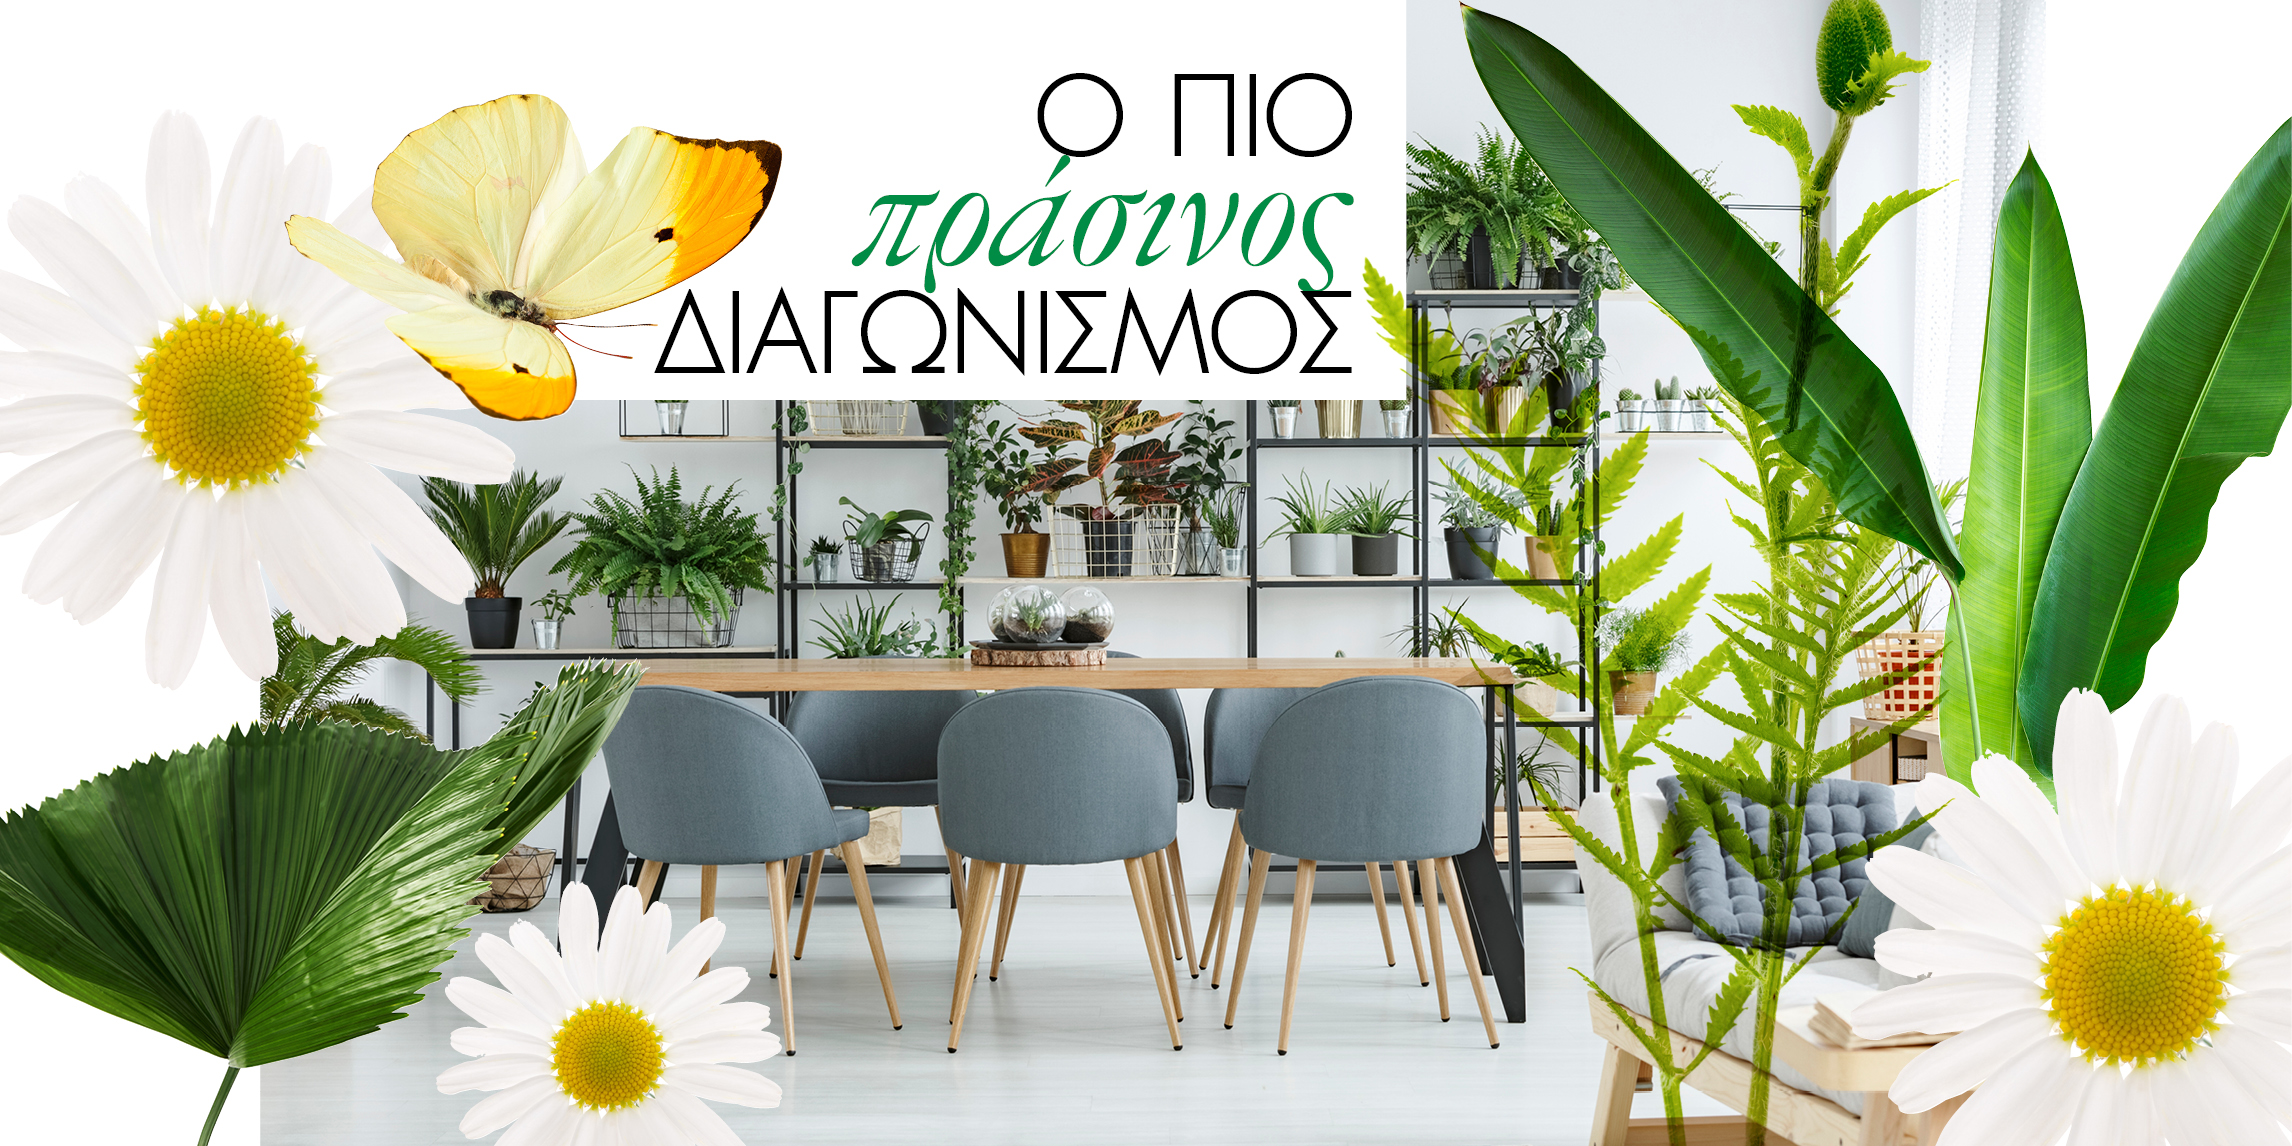 Green Διαγωνισμός: 1 τυχερή θα μεταμορφώσει το σπίτι της κερδίζοντας φυτά αξίας €500 από την HappyPlants